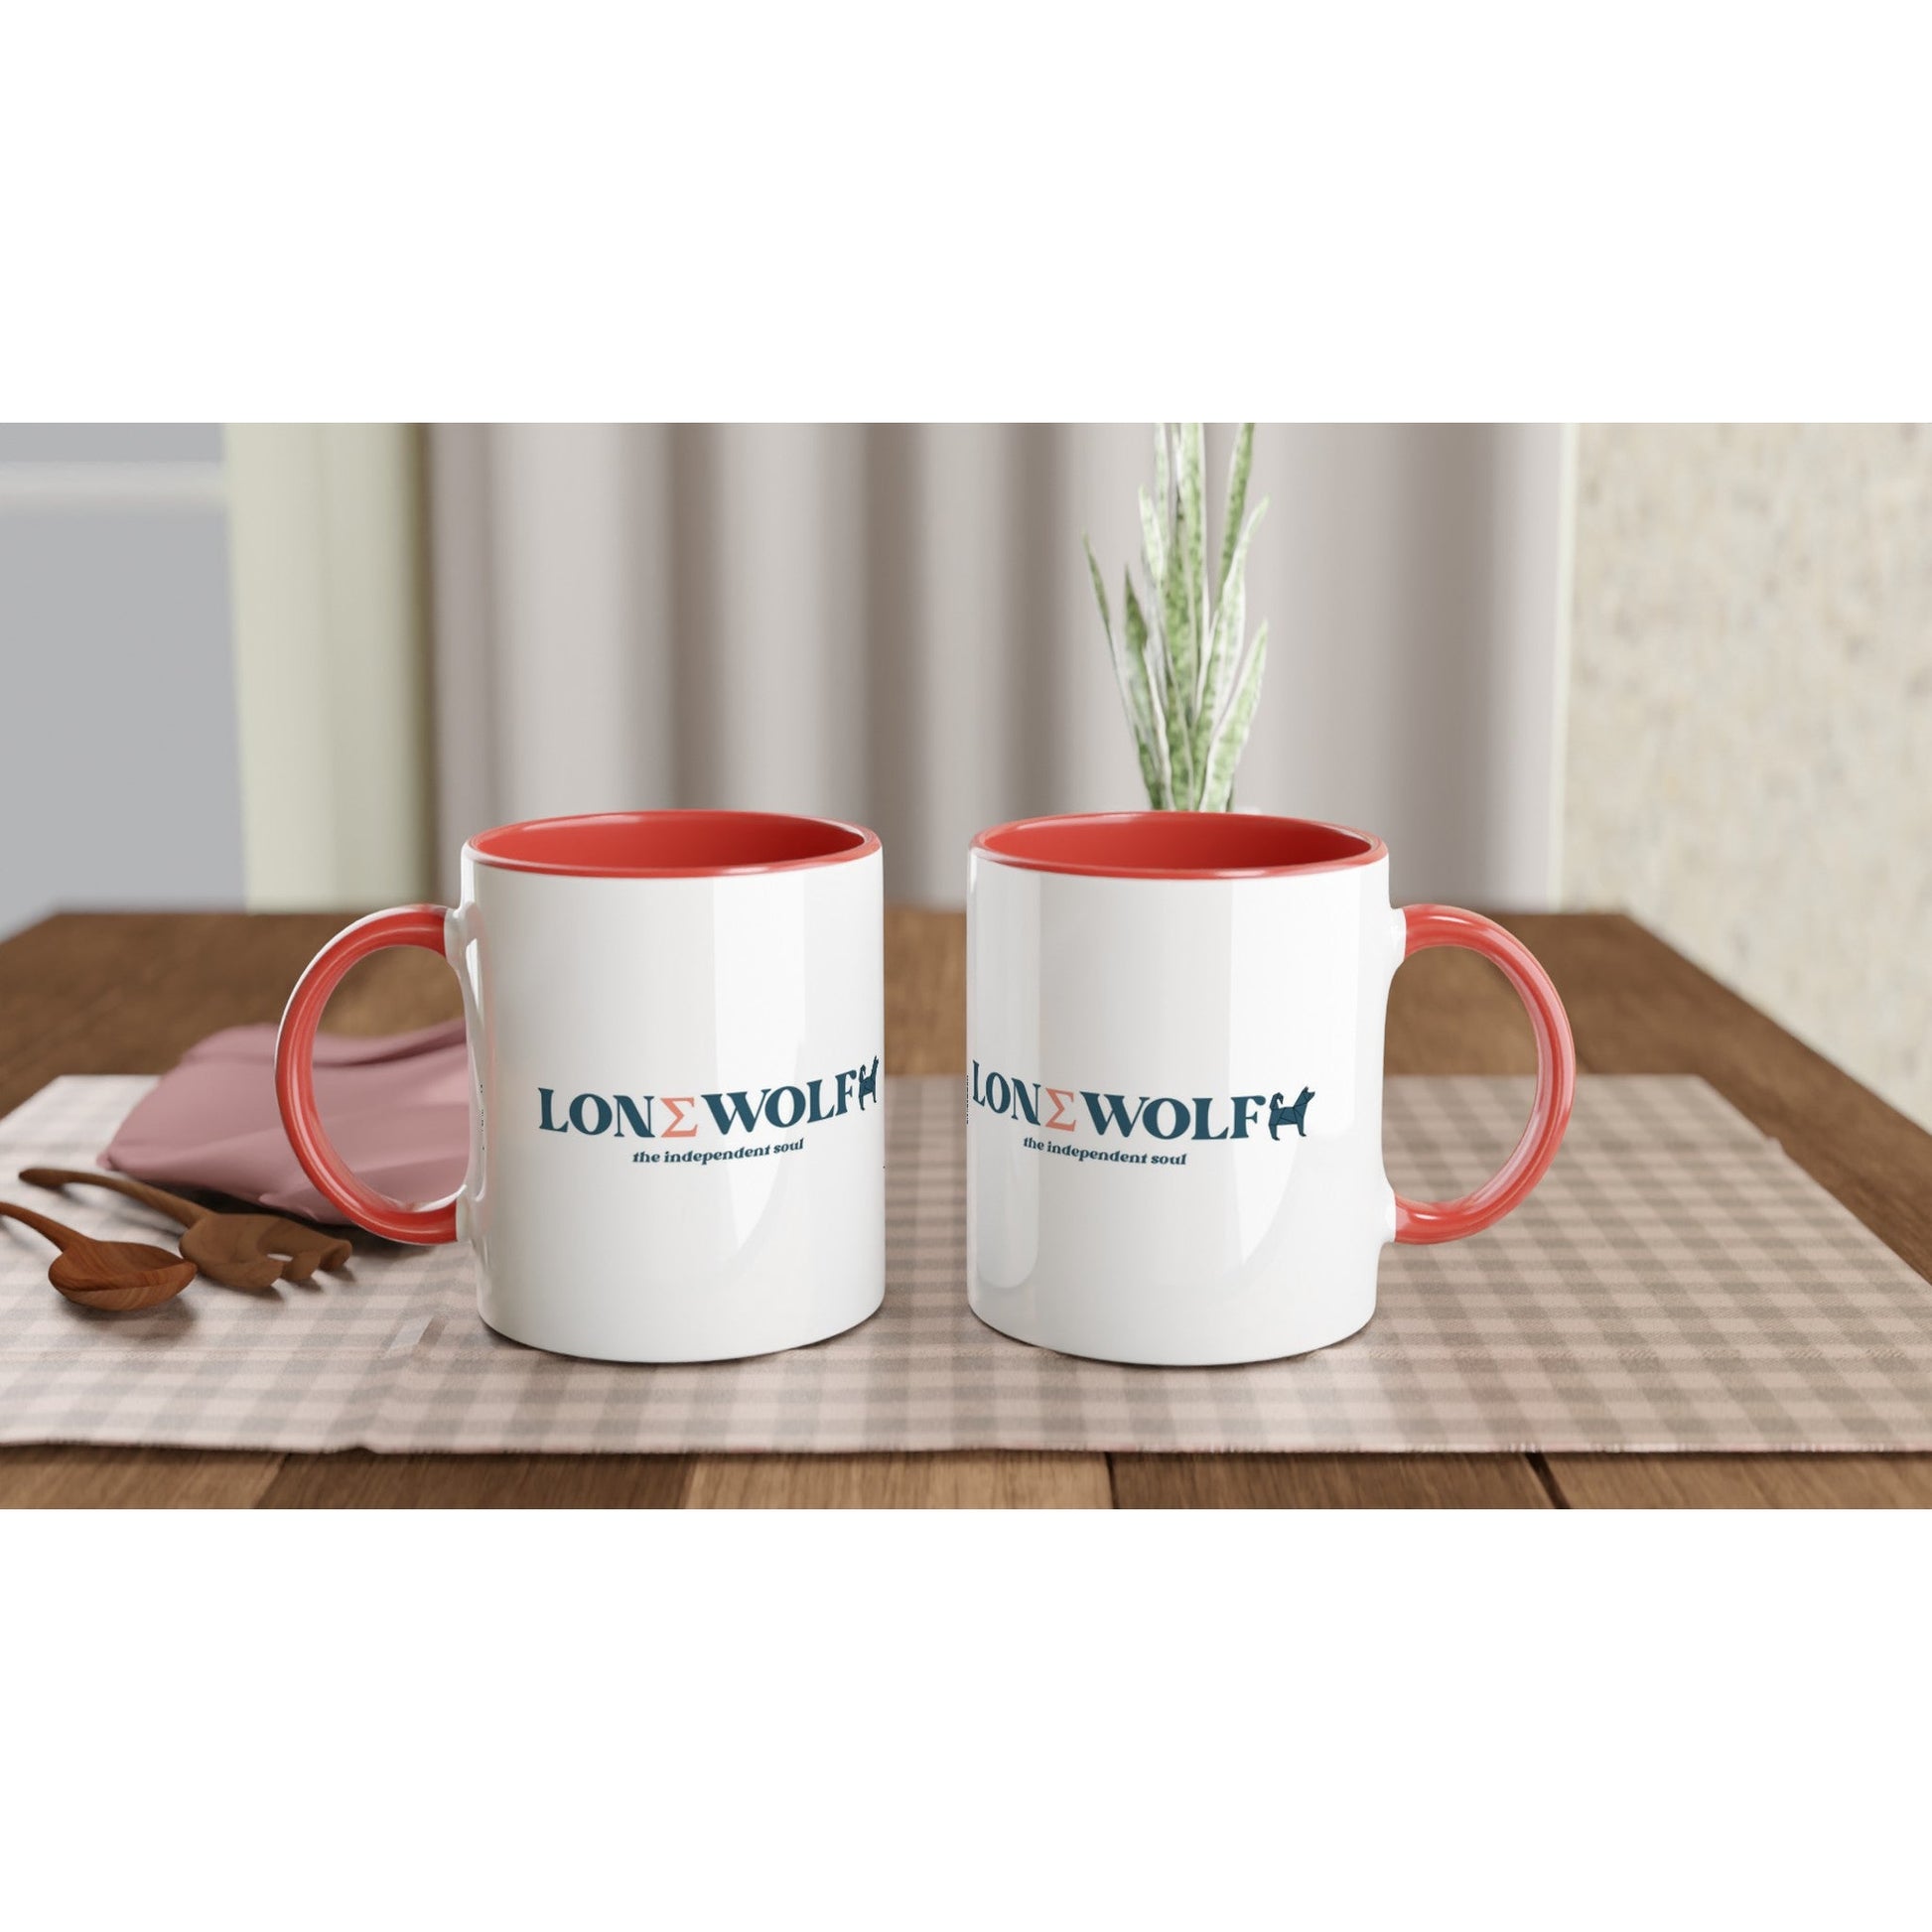 11oz Ceramic Mug with Lone Wolf slogan - Hobbster